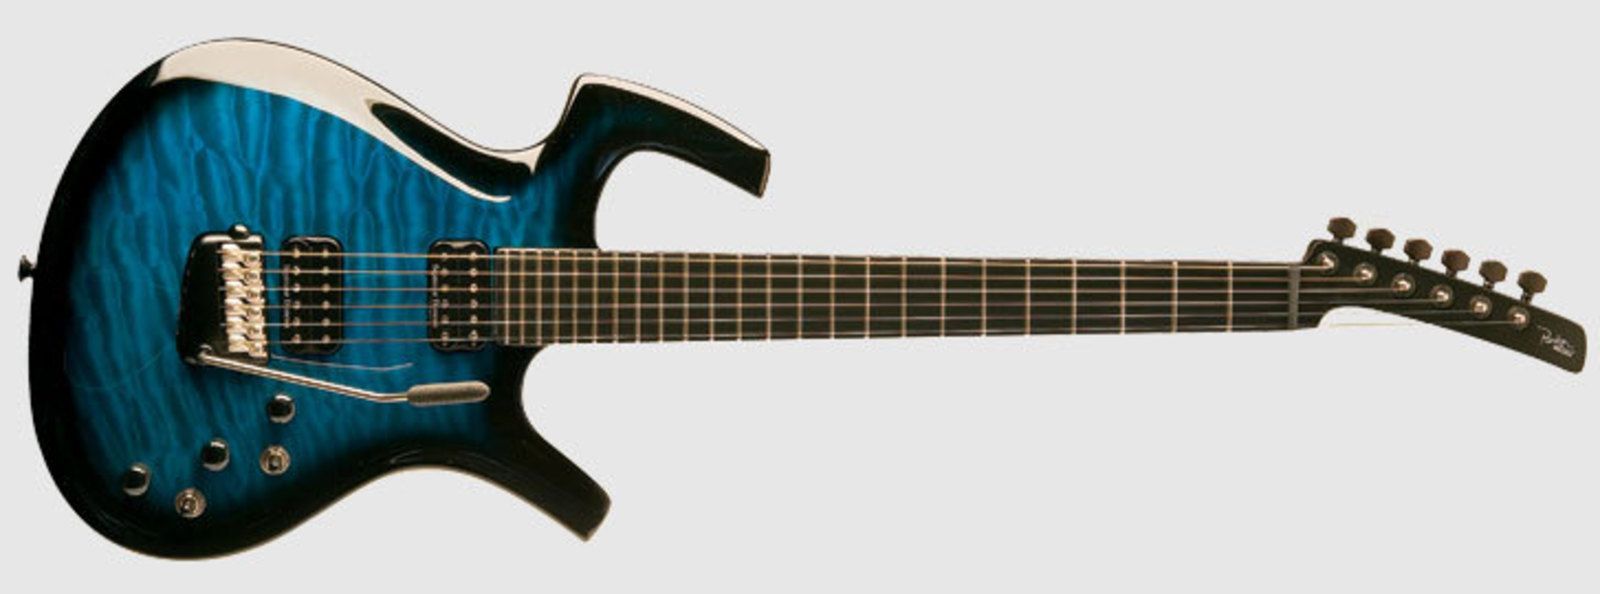 Parker Guitars Fly Mojo Flame - Black Burst image (#43925.